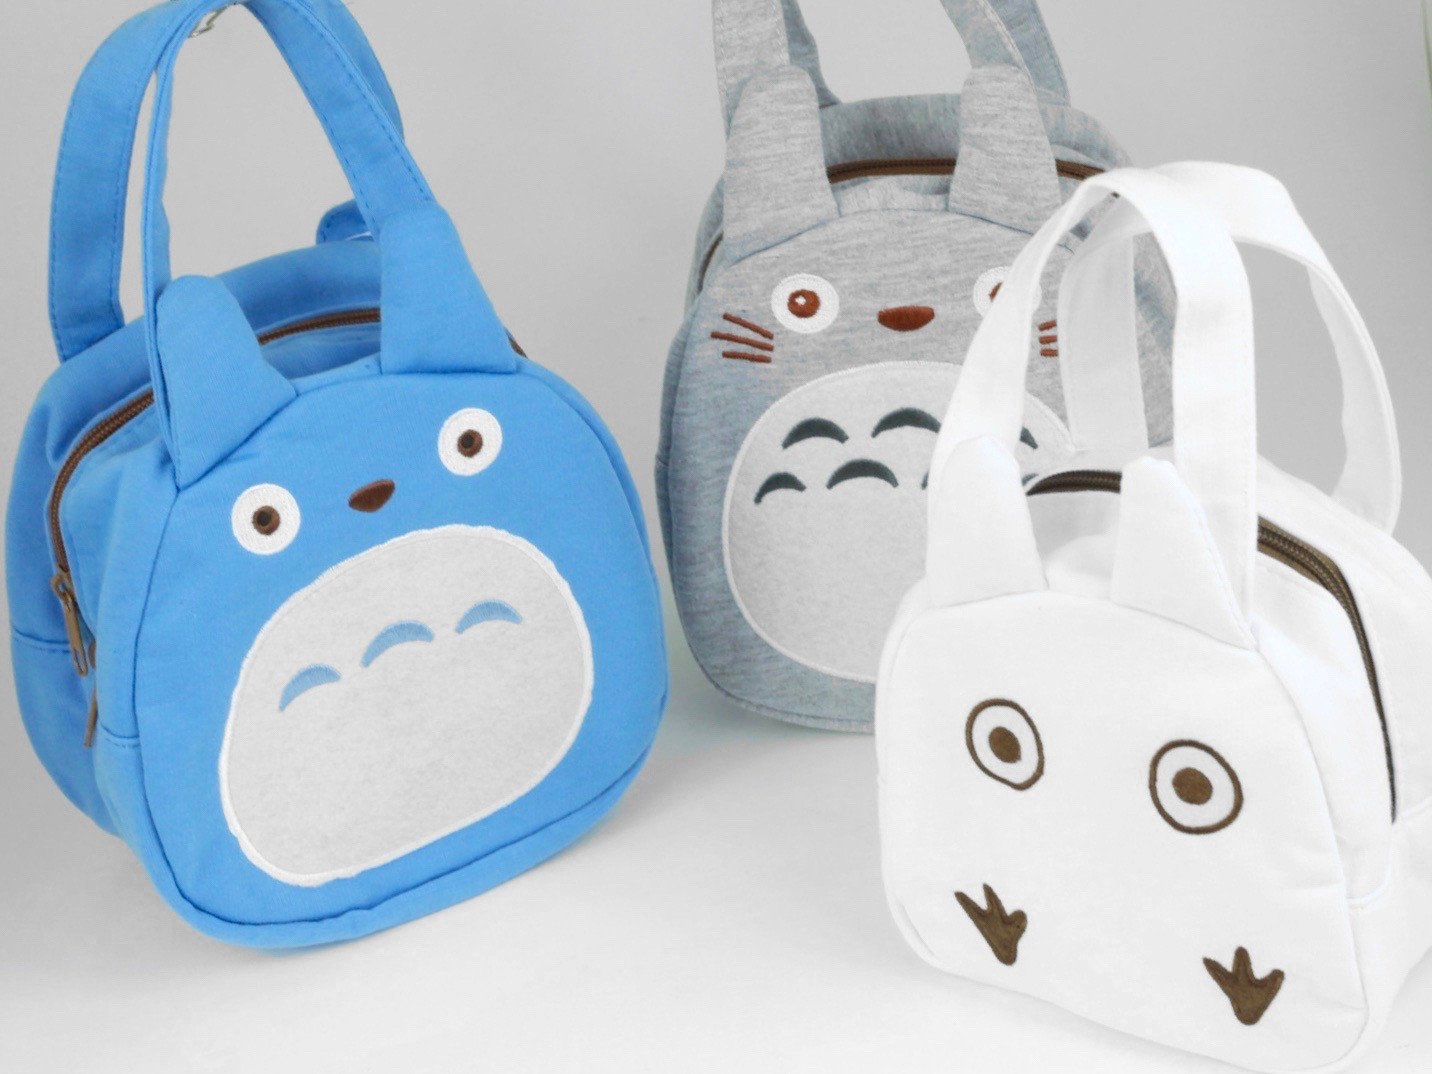 Totoro Bento Bag | Mascot Blue